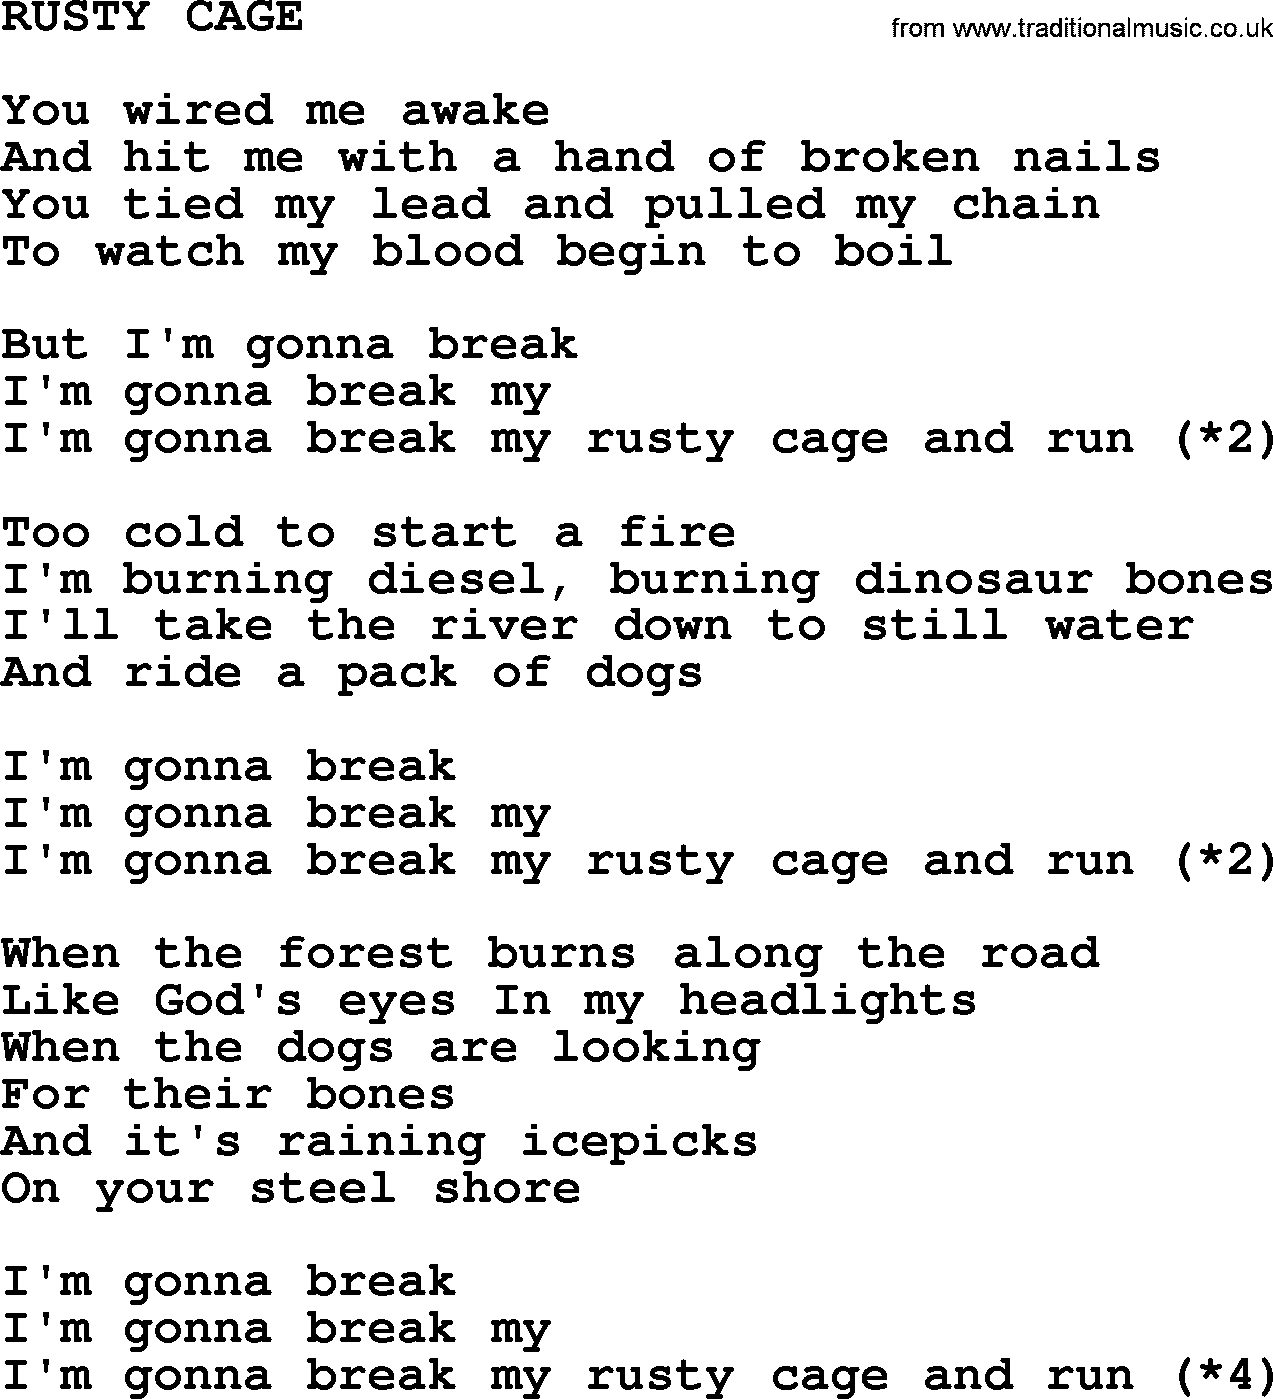 Johnny Cash song Rusty Cage.txt lyrics